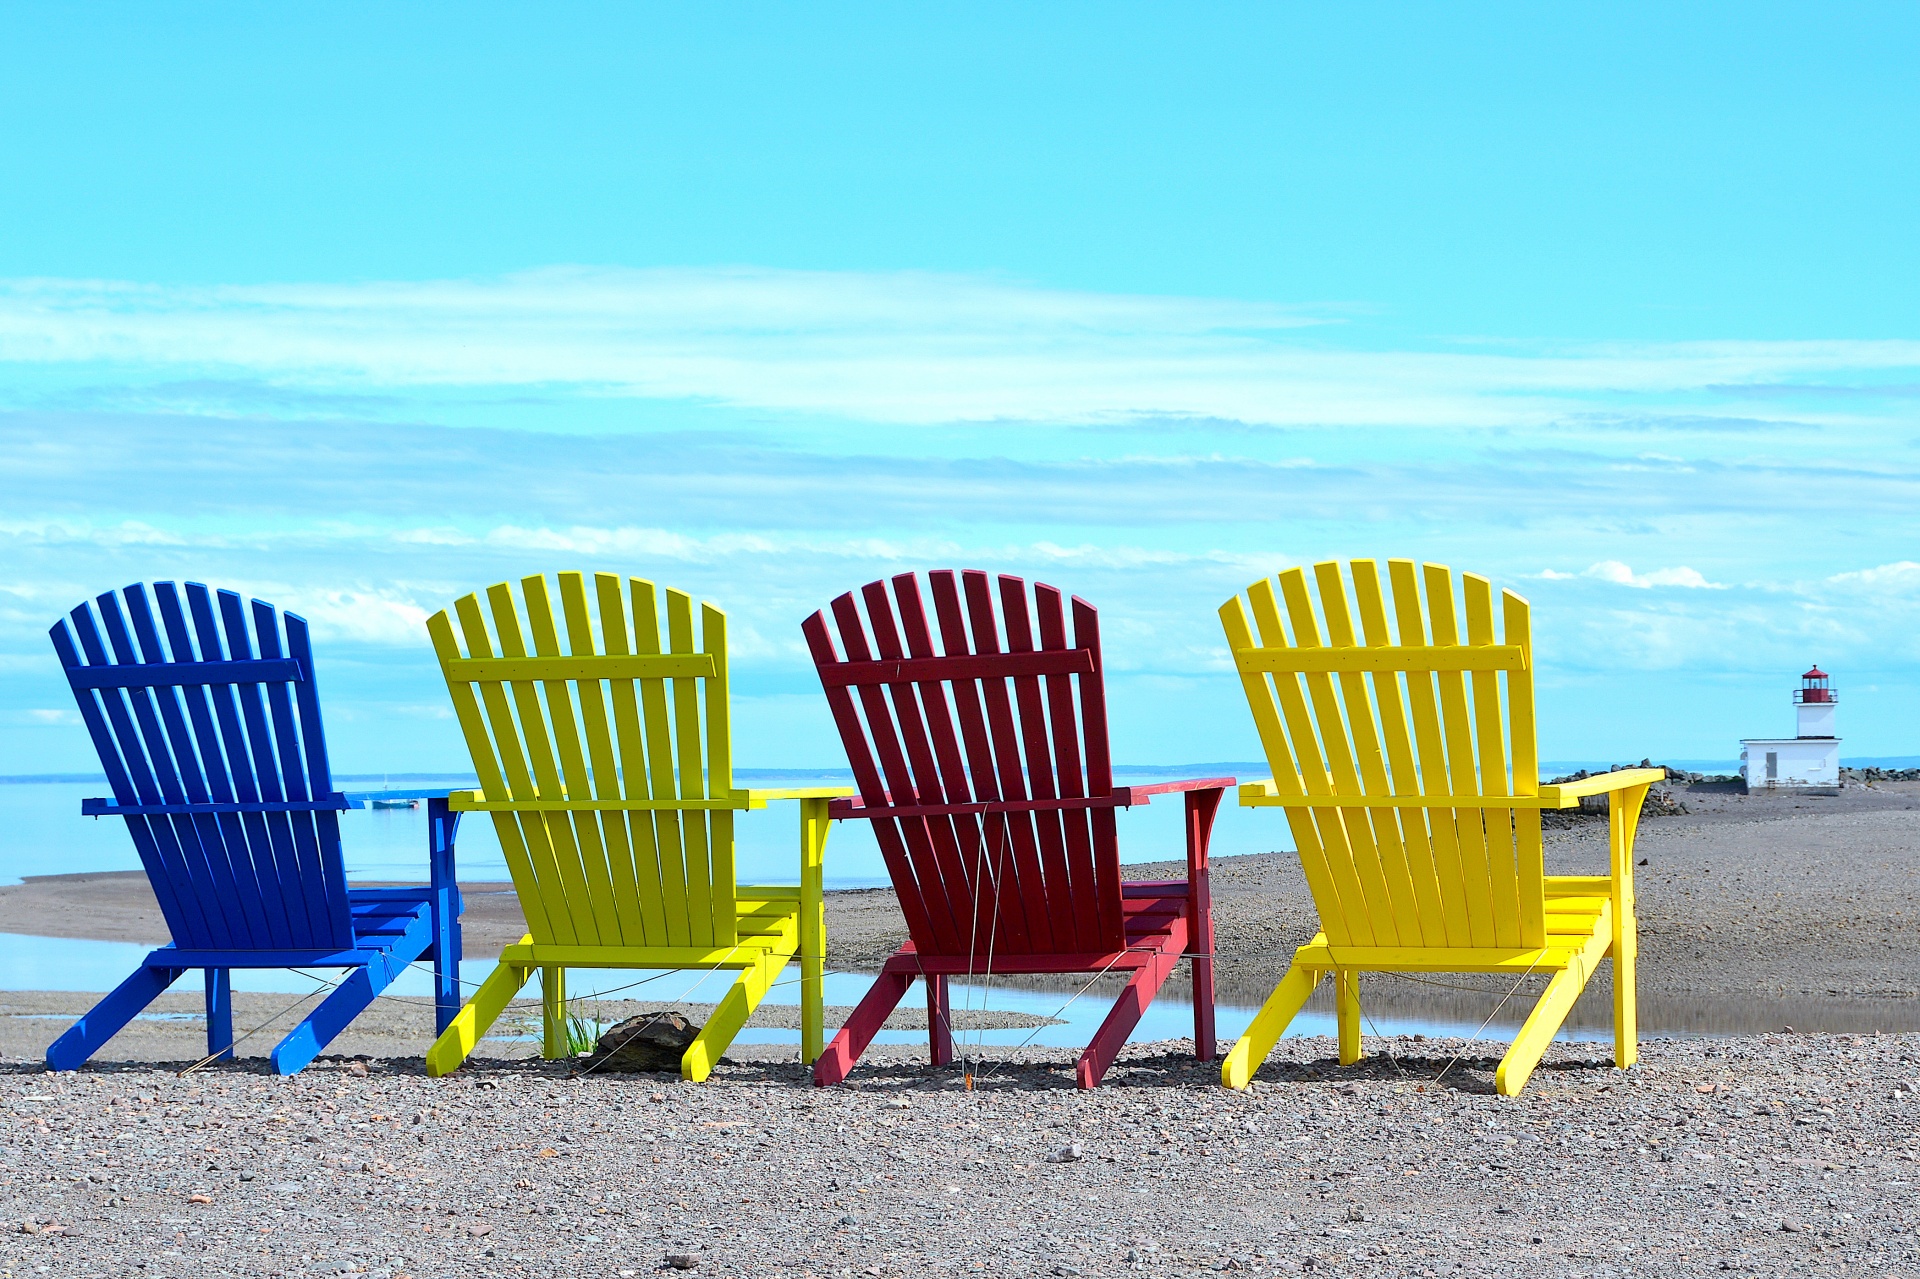 Big chairs on the sandy beach.